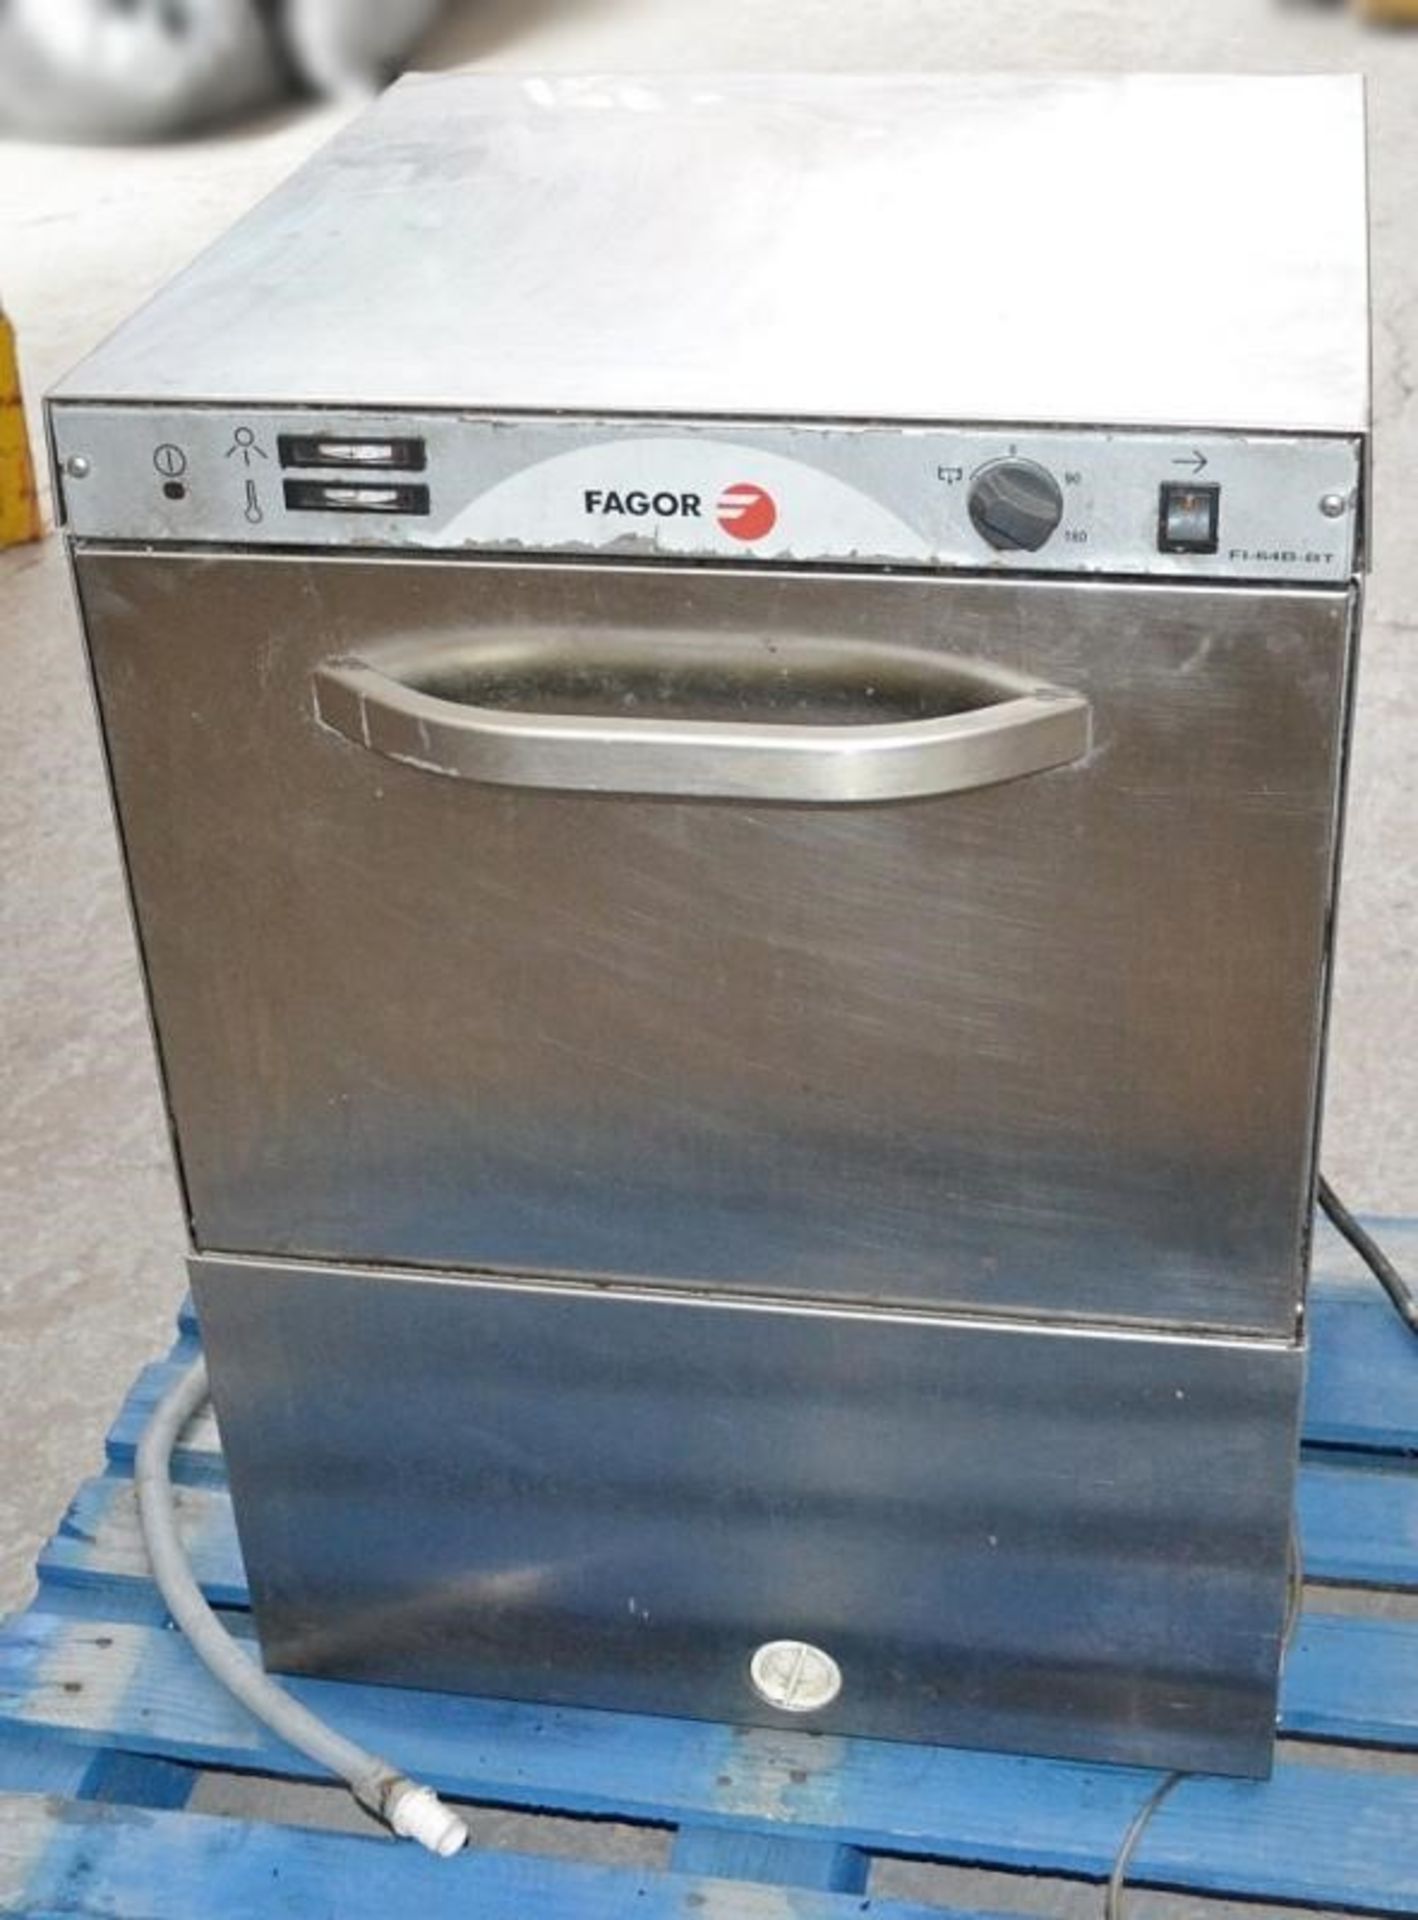 1 x FAGOR Dishwasher - Model: FI-64B-BT - Dimensions: H82 x W59.5 x D66cm - Ref: LH256 - CL261 - Loc